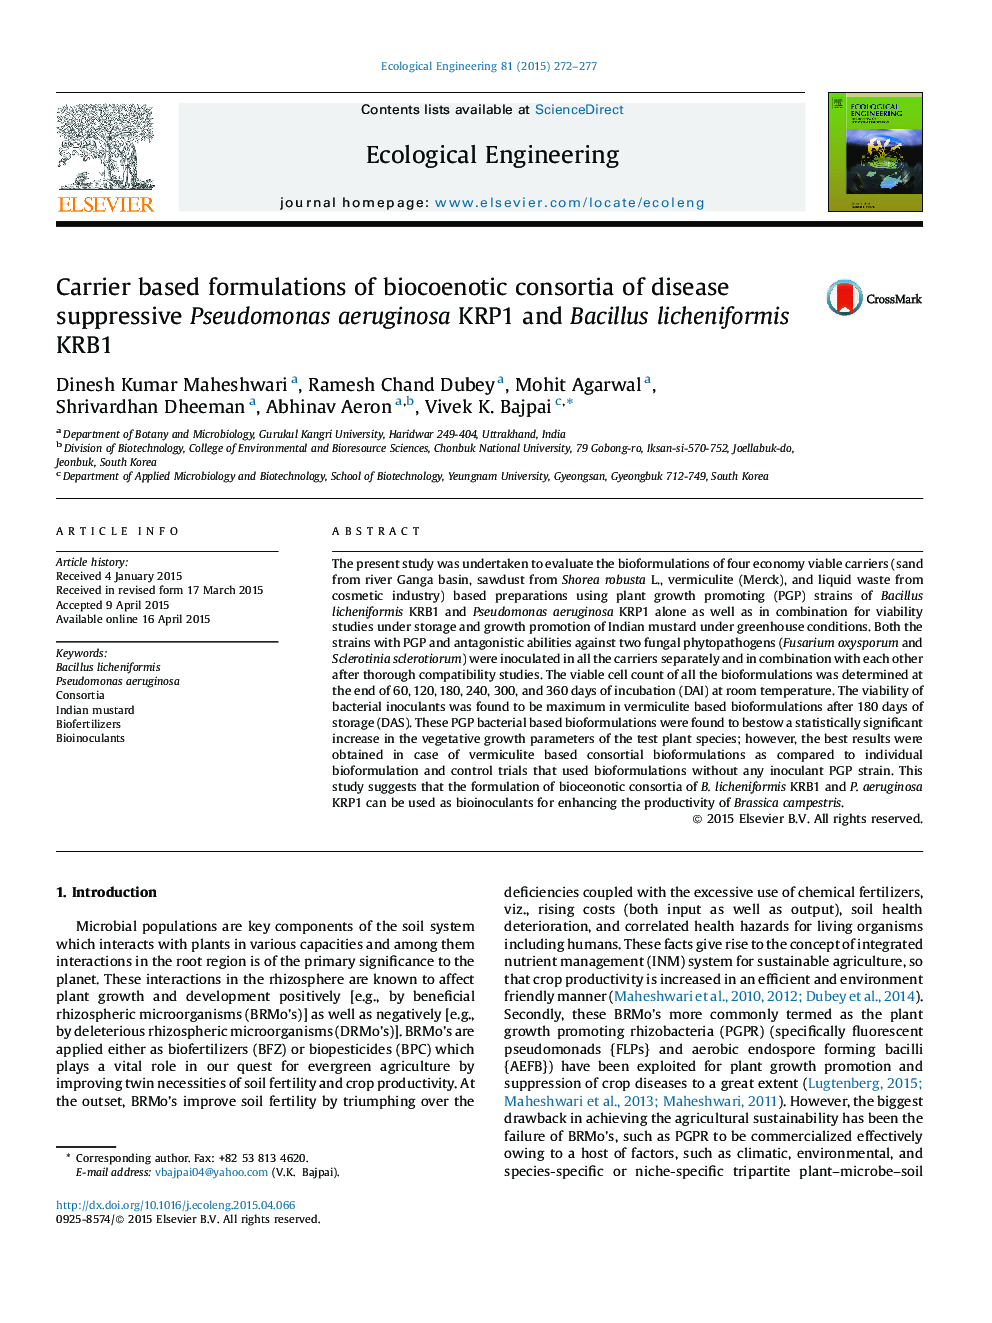 Carrier based formulations of biocoenotic consortia of disease suppressive Pseudomonas aeruginosa KRP1 and Bacillus licheniformis KRB1